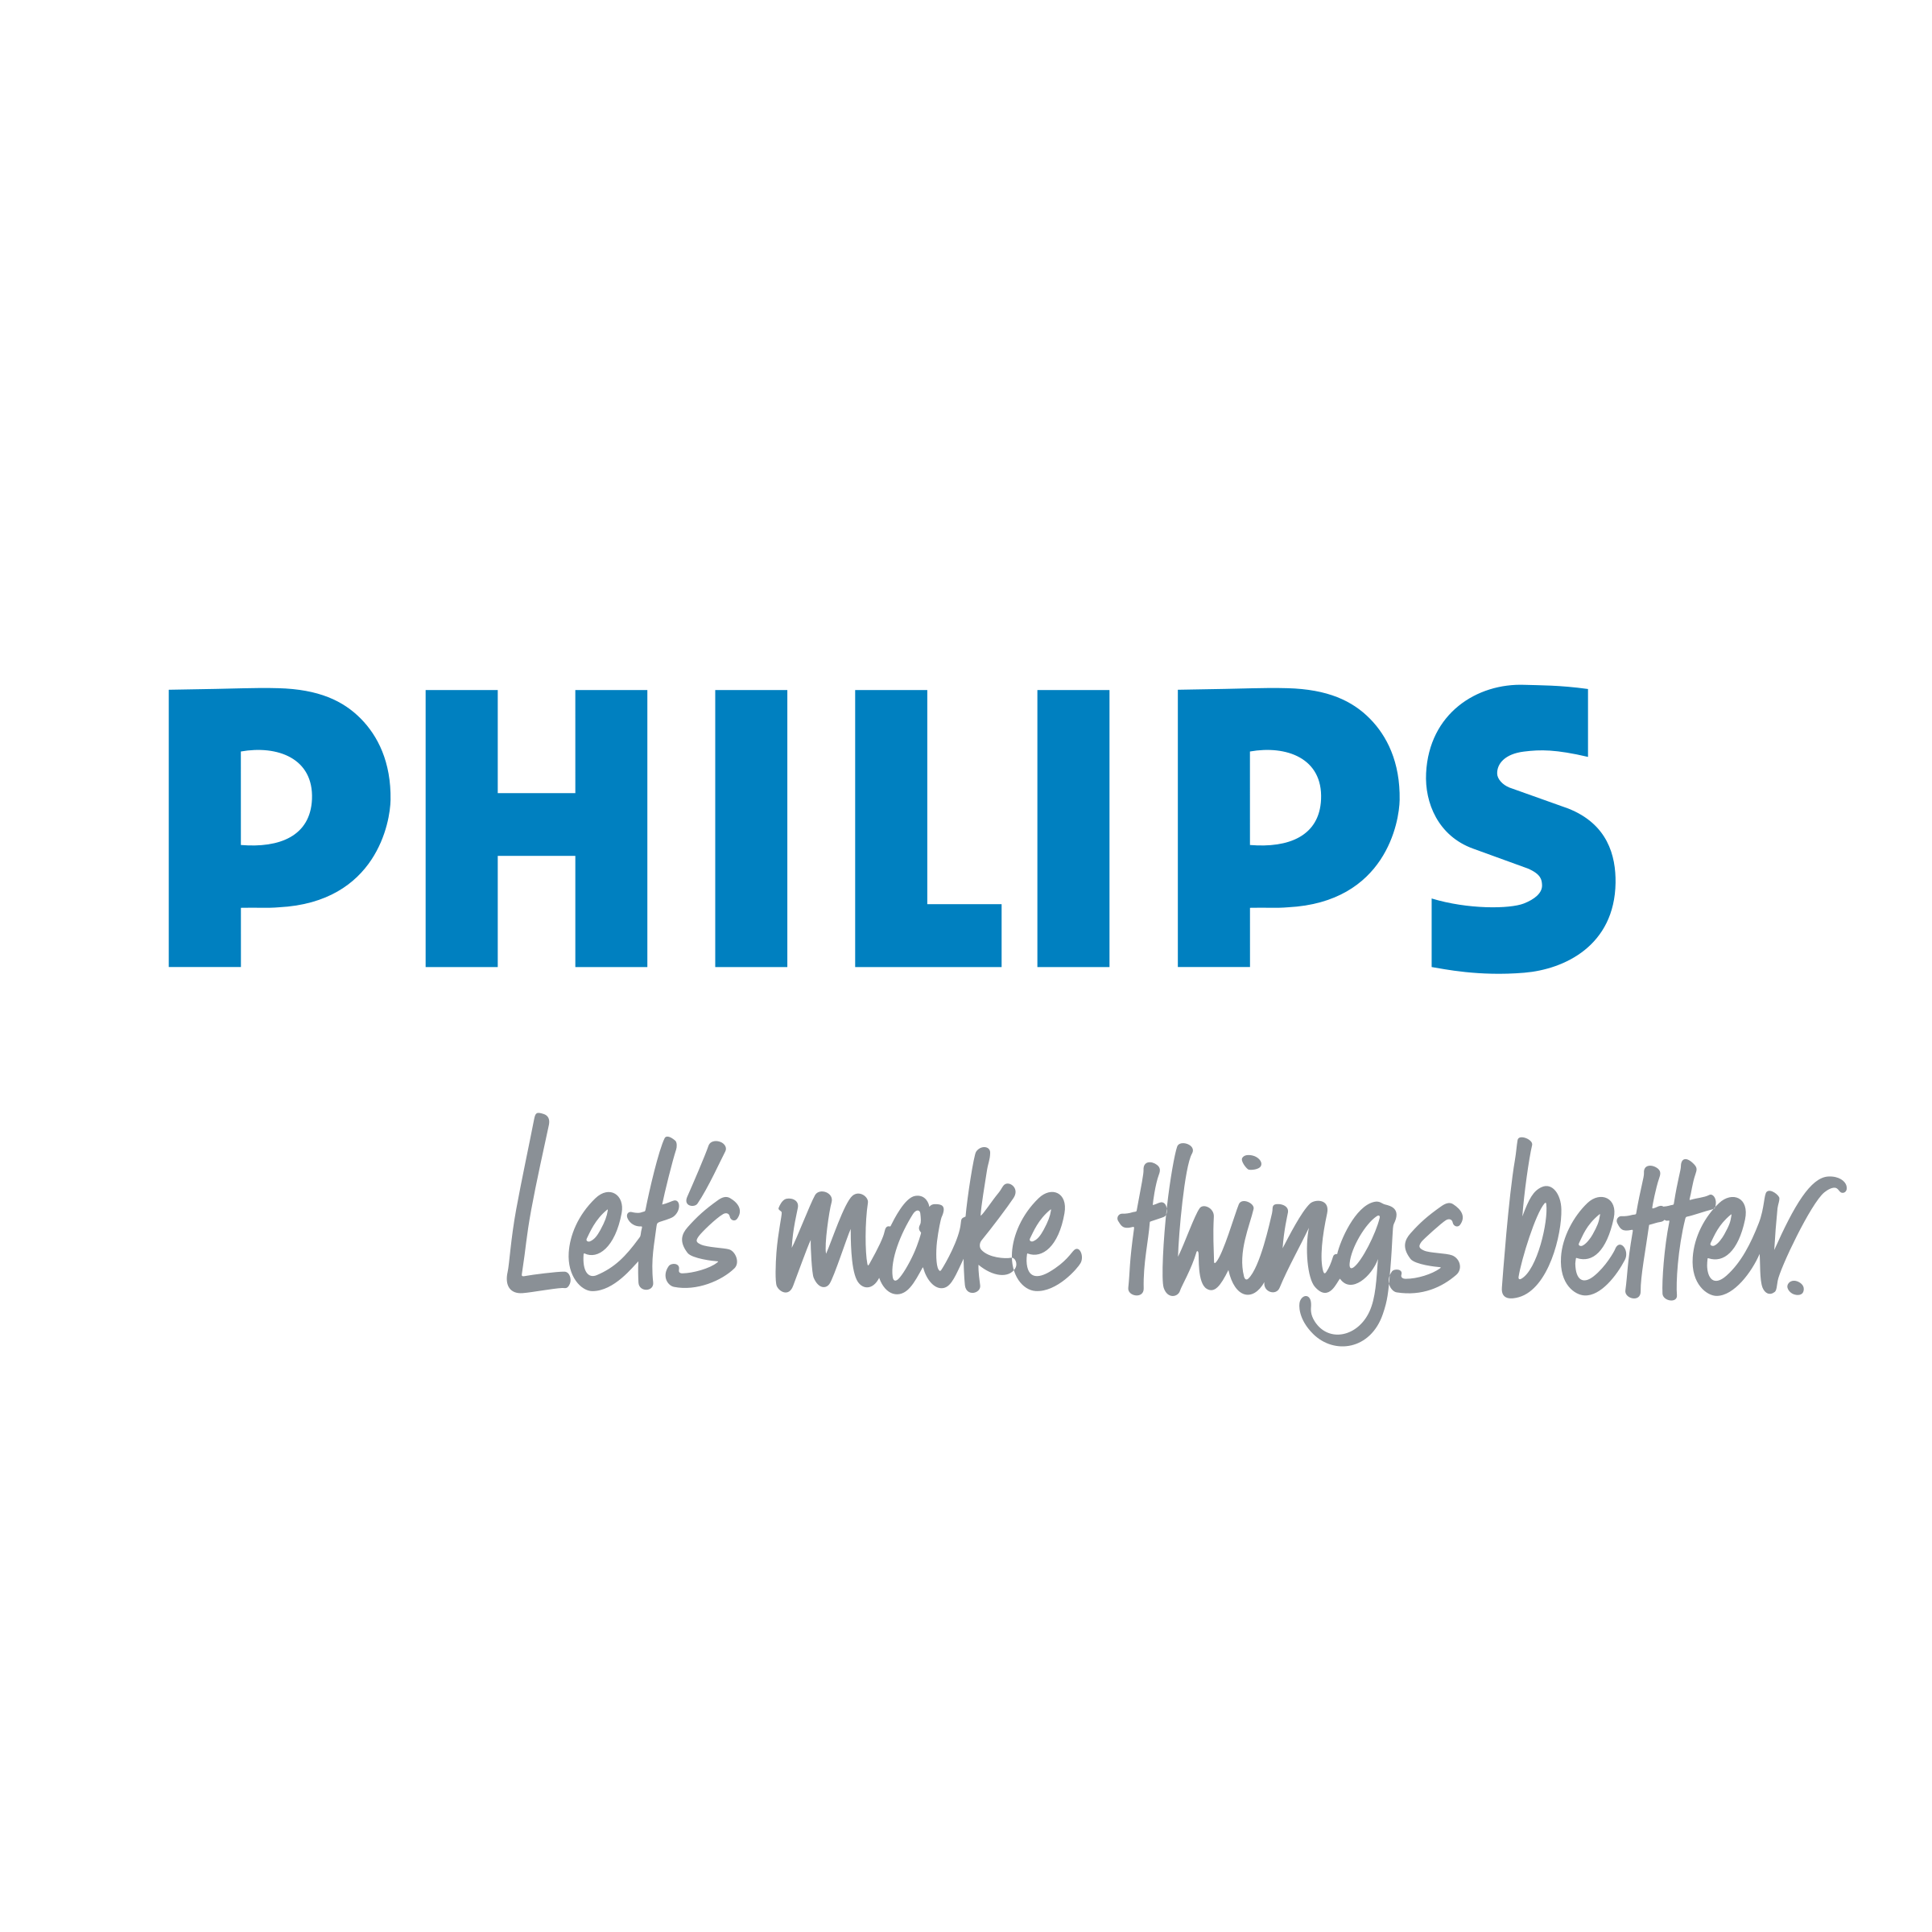 46cd8d Philips Shield Philips